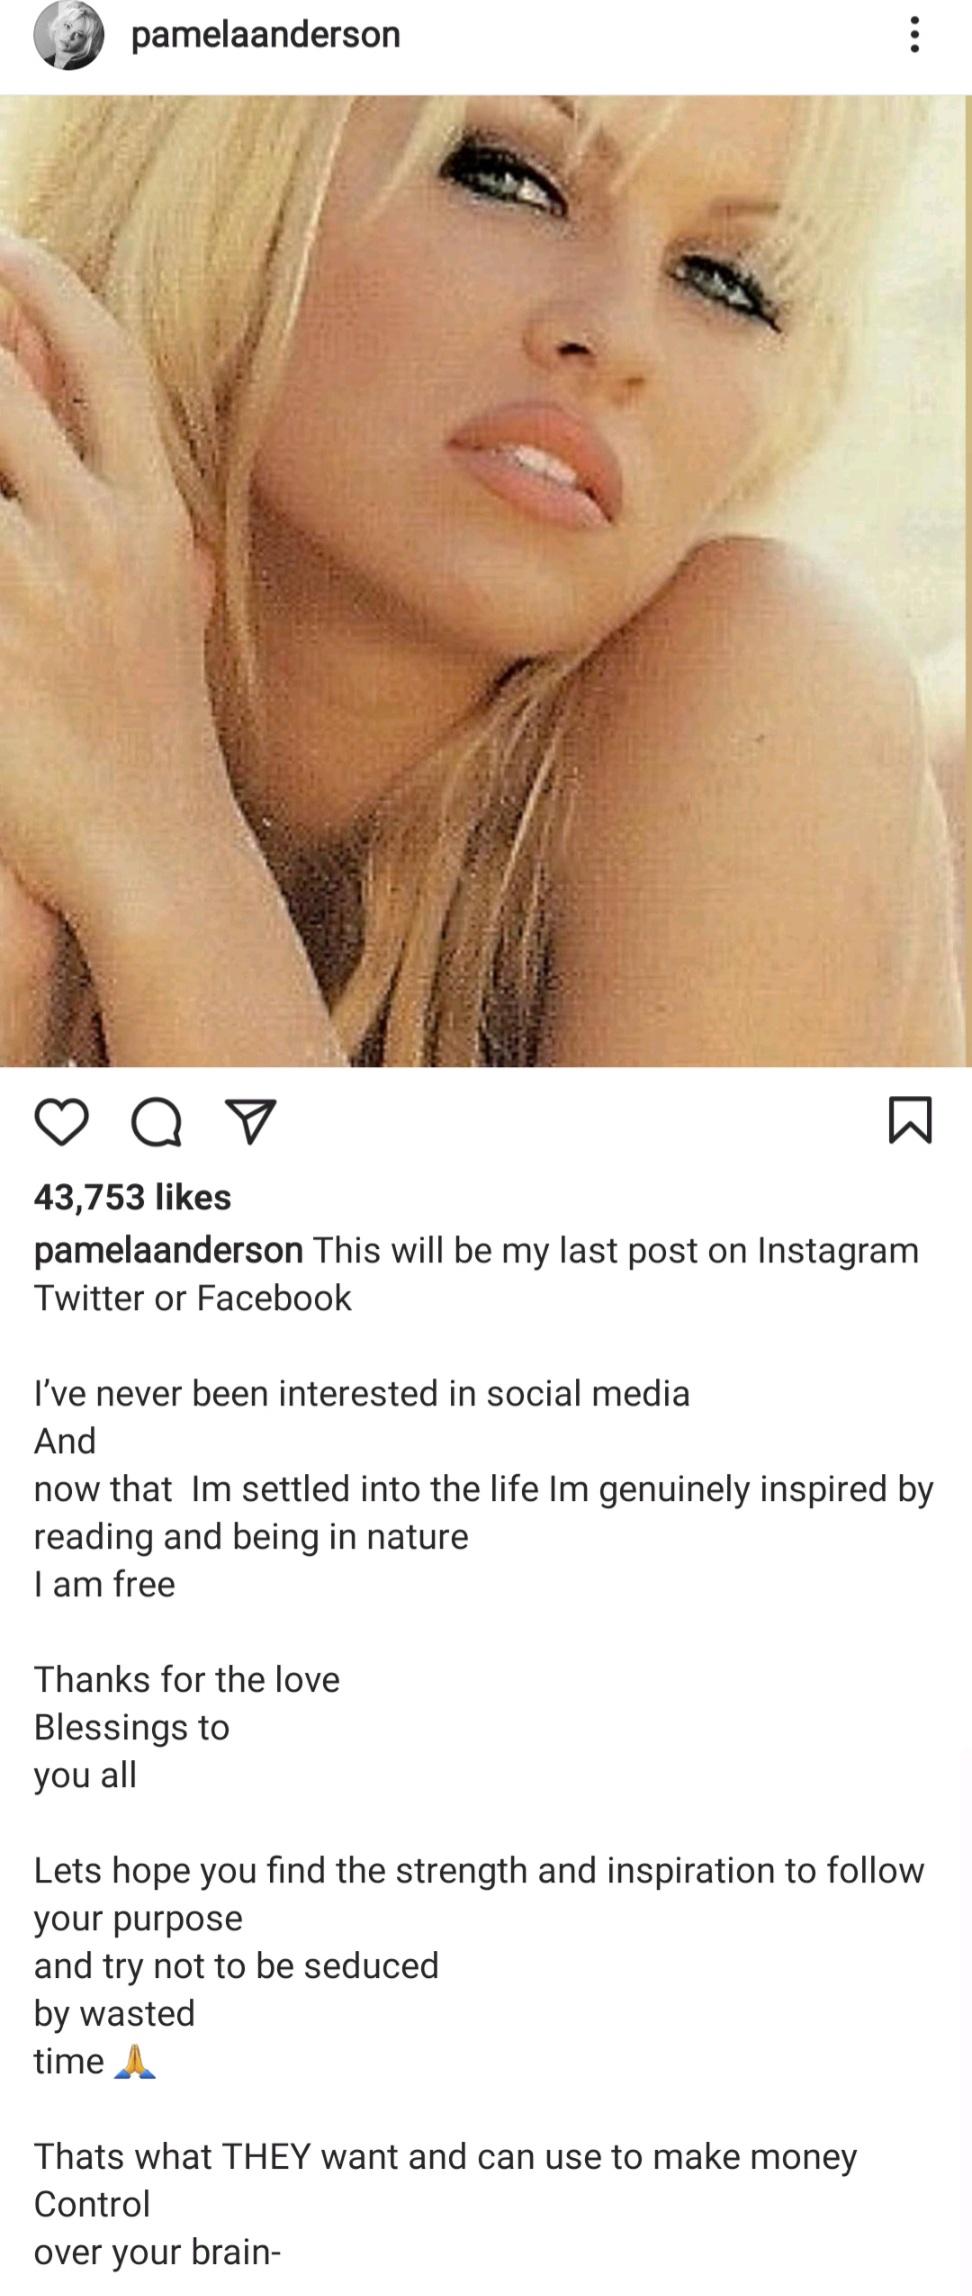 Pamela Anderson Fucking - Pamela Anderson: \